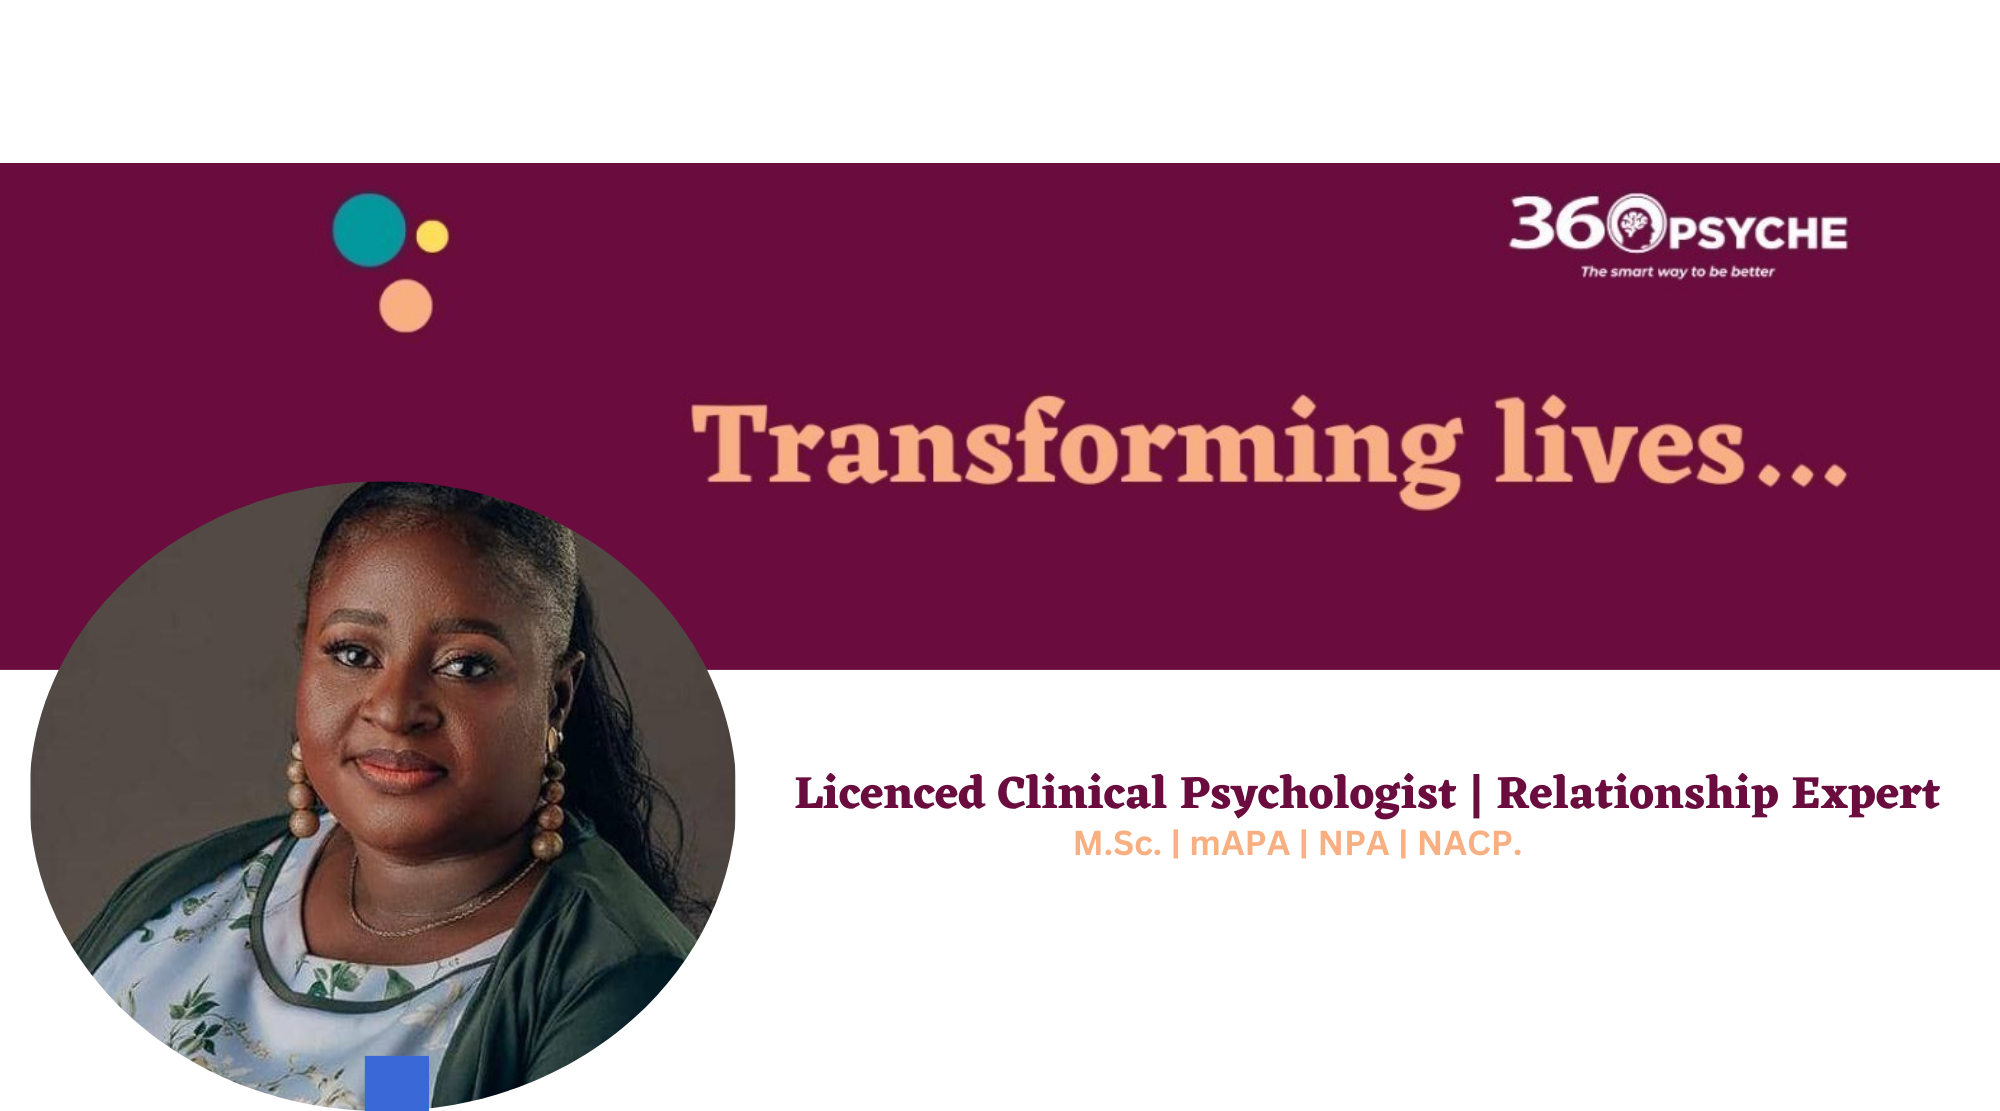 Licenced Clinical Psychologist Relationship Expert Abuja Nigeria - Priscilla Bako - 360 Psyche